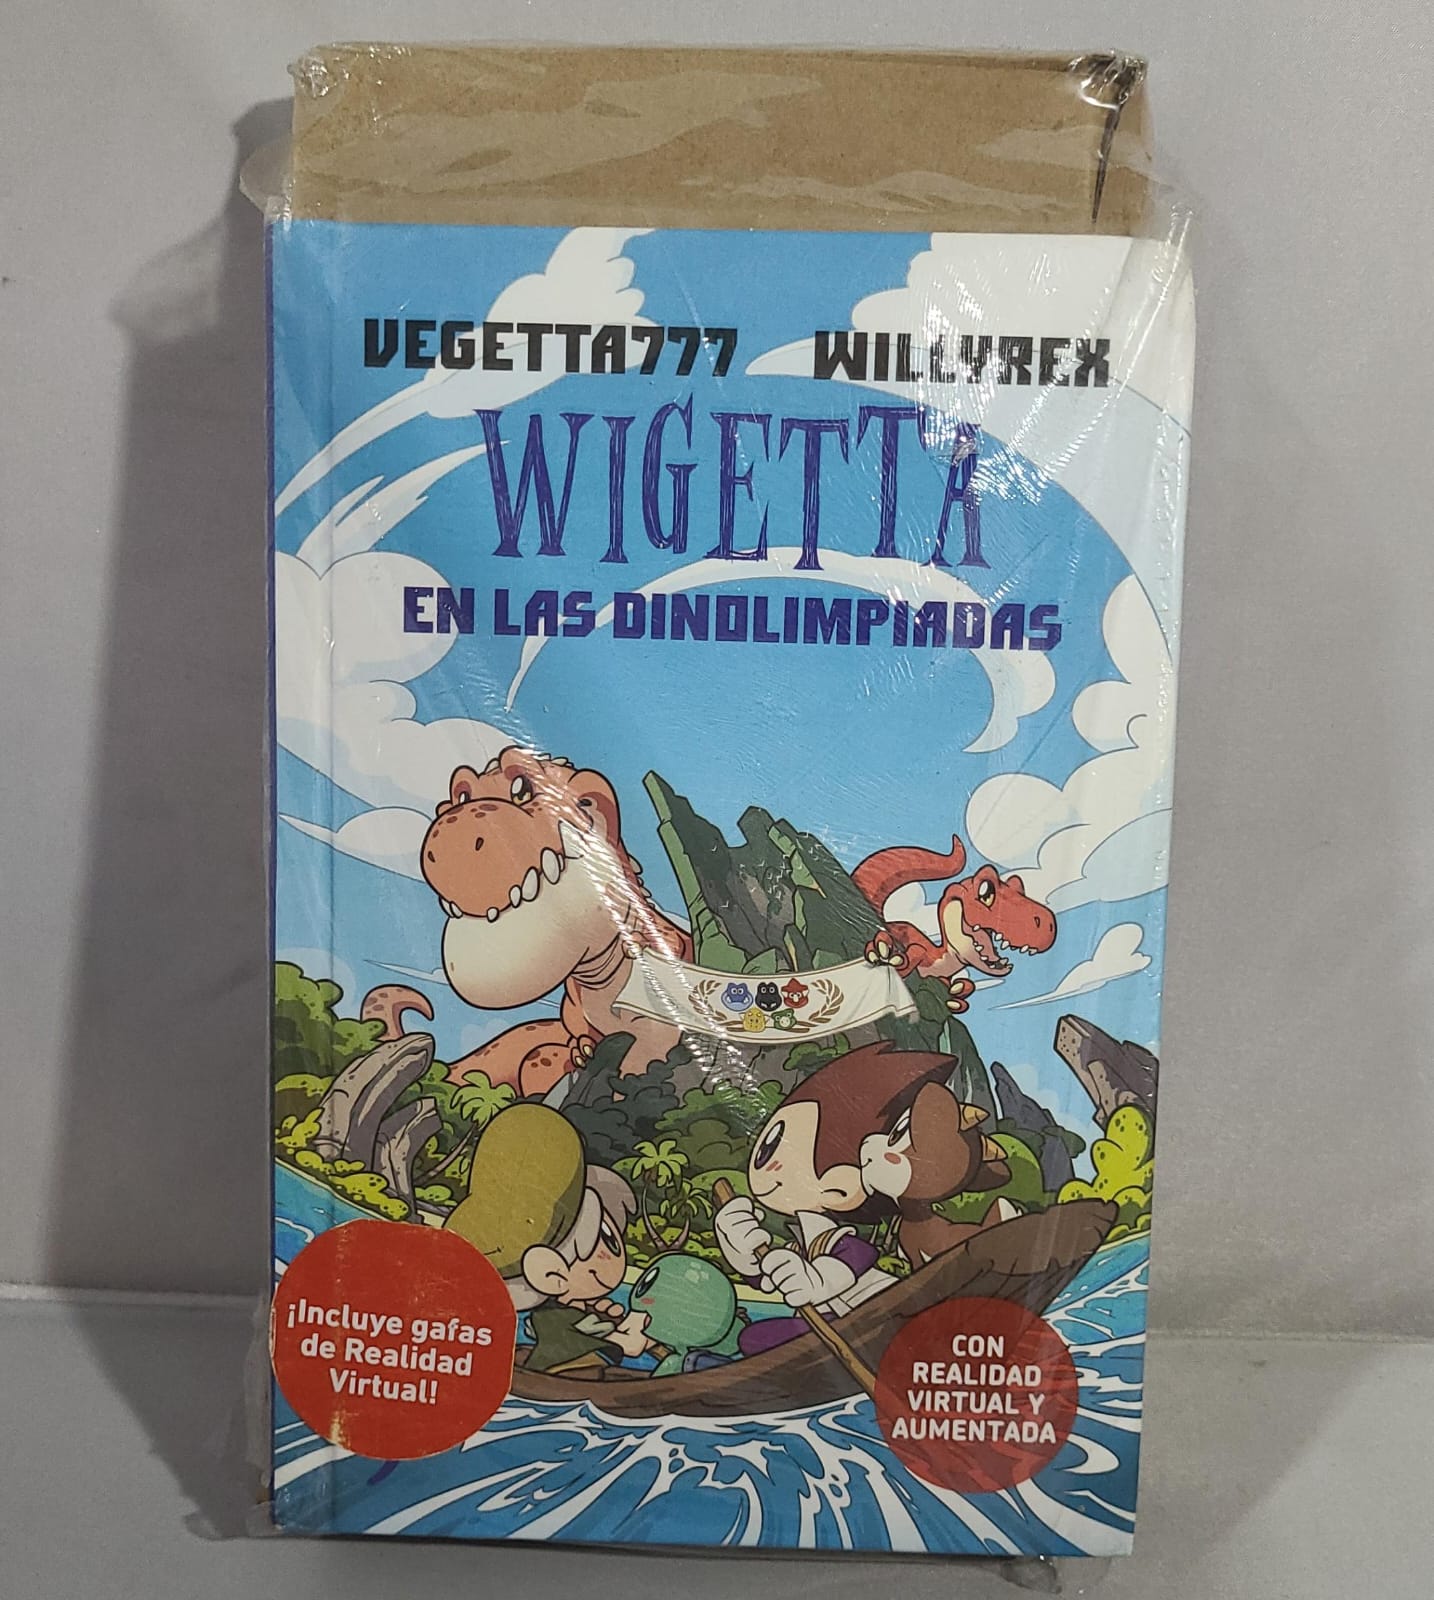 Libro Wigetta En Las Dinolimpiadas Vizz Vegetta 777 [Openbox]